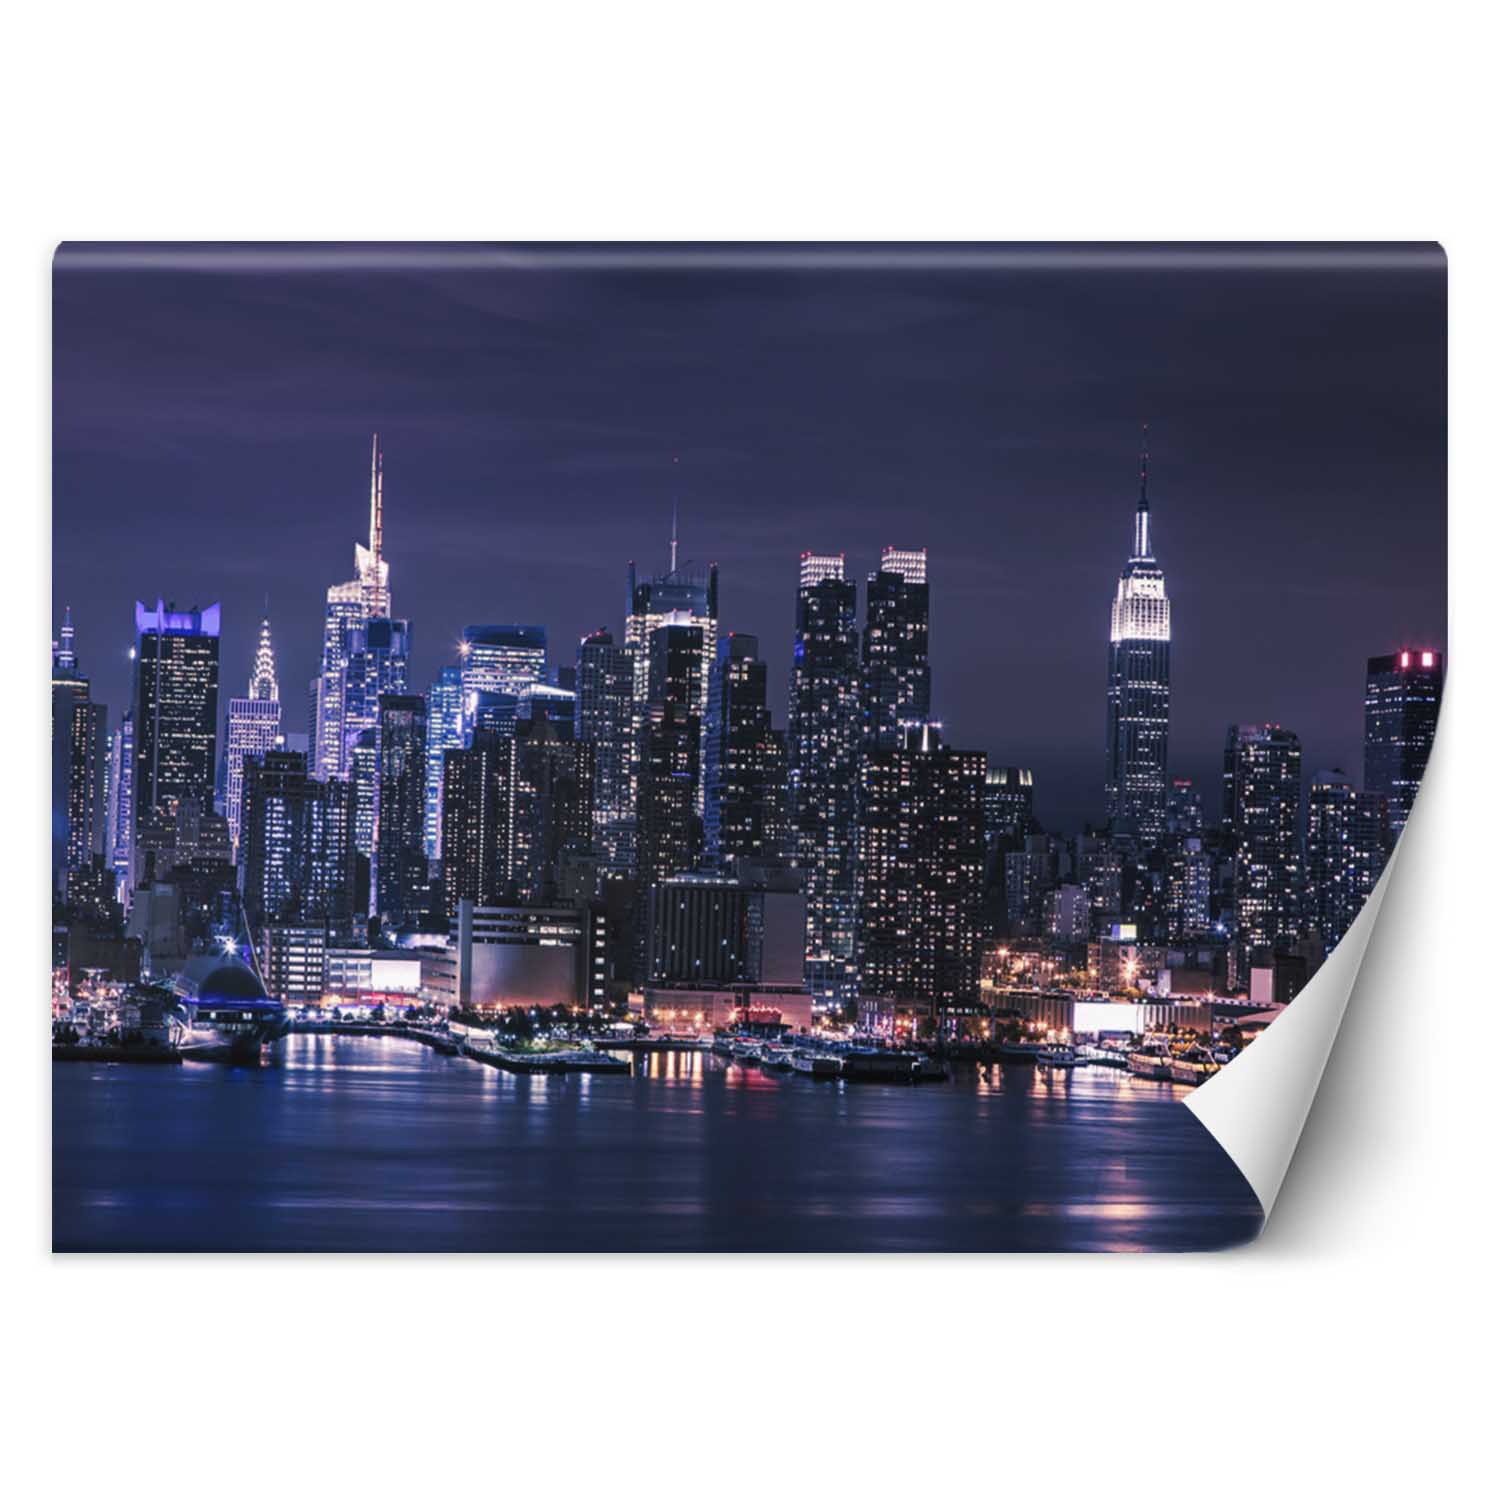 Trend24 – Behang – New York ‘S Nachts – Vliesbehang – Fotobehang – Behang Woonkamer – 450x315x2 cm – Incl. behanglijm